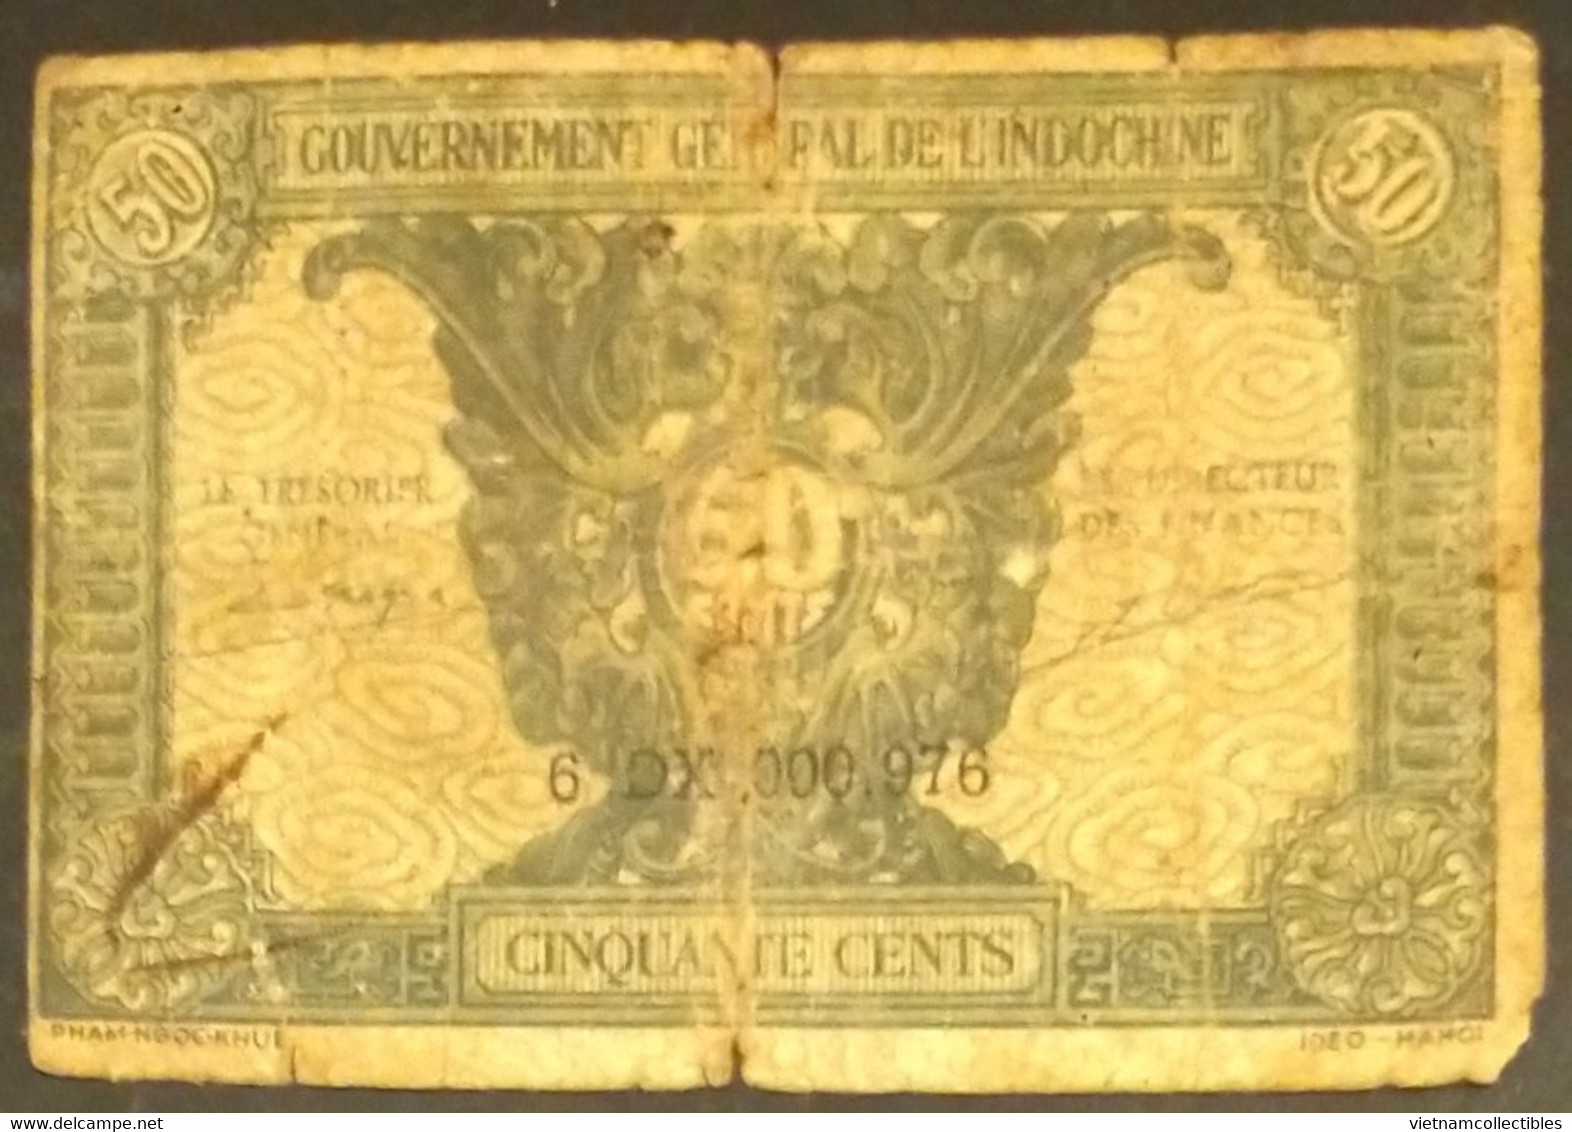 French Indochine Indochina Vietnam Viet Nam Laos Cambodia 50 Cents VG Banknote Note Billet 1942 - Pick # 91b / 2 Photos - Indochina